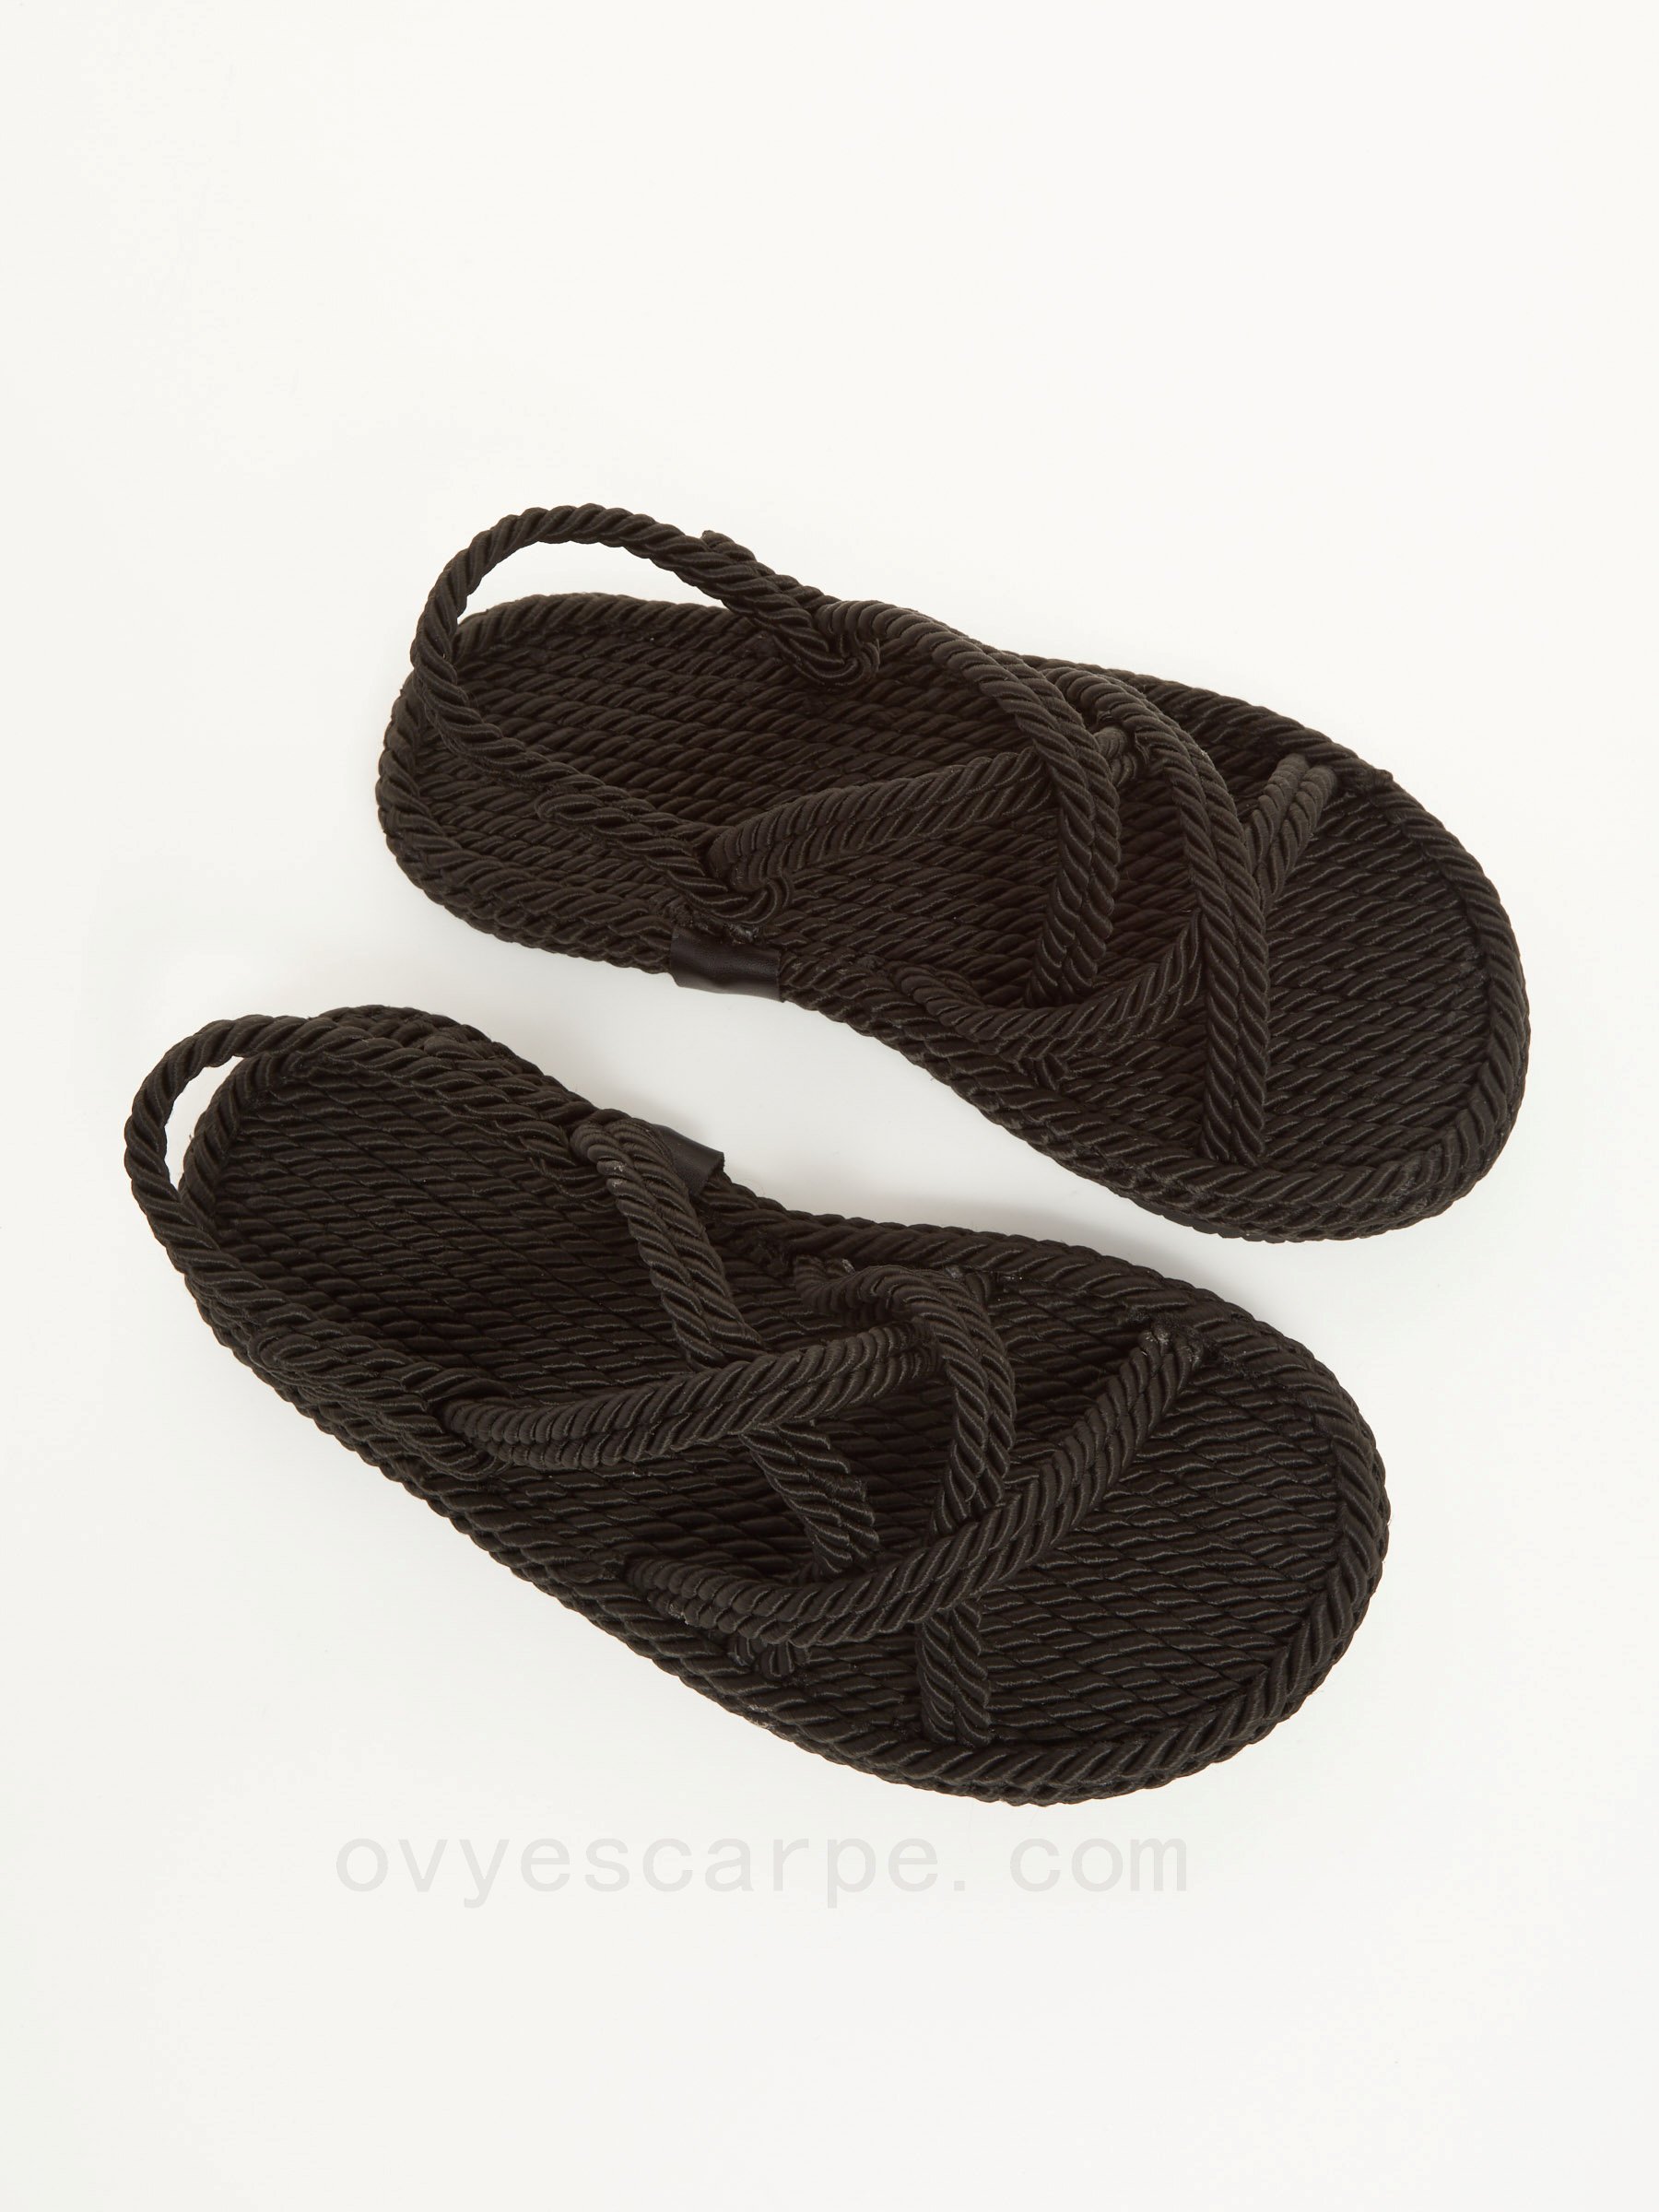 Rope Flat Sandals F08161027-0712 ovy&#232; scarpe